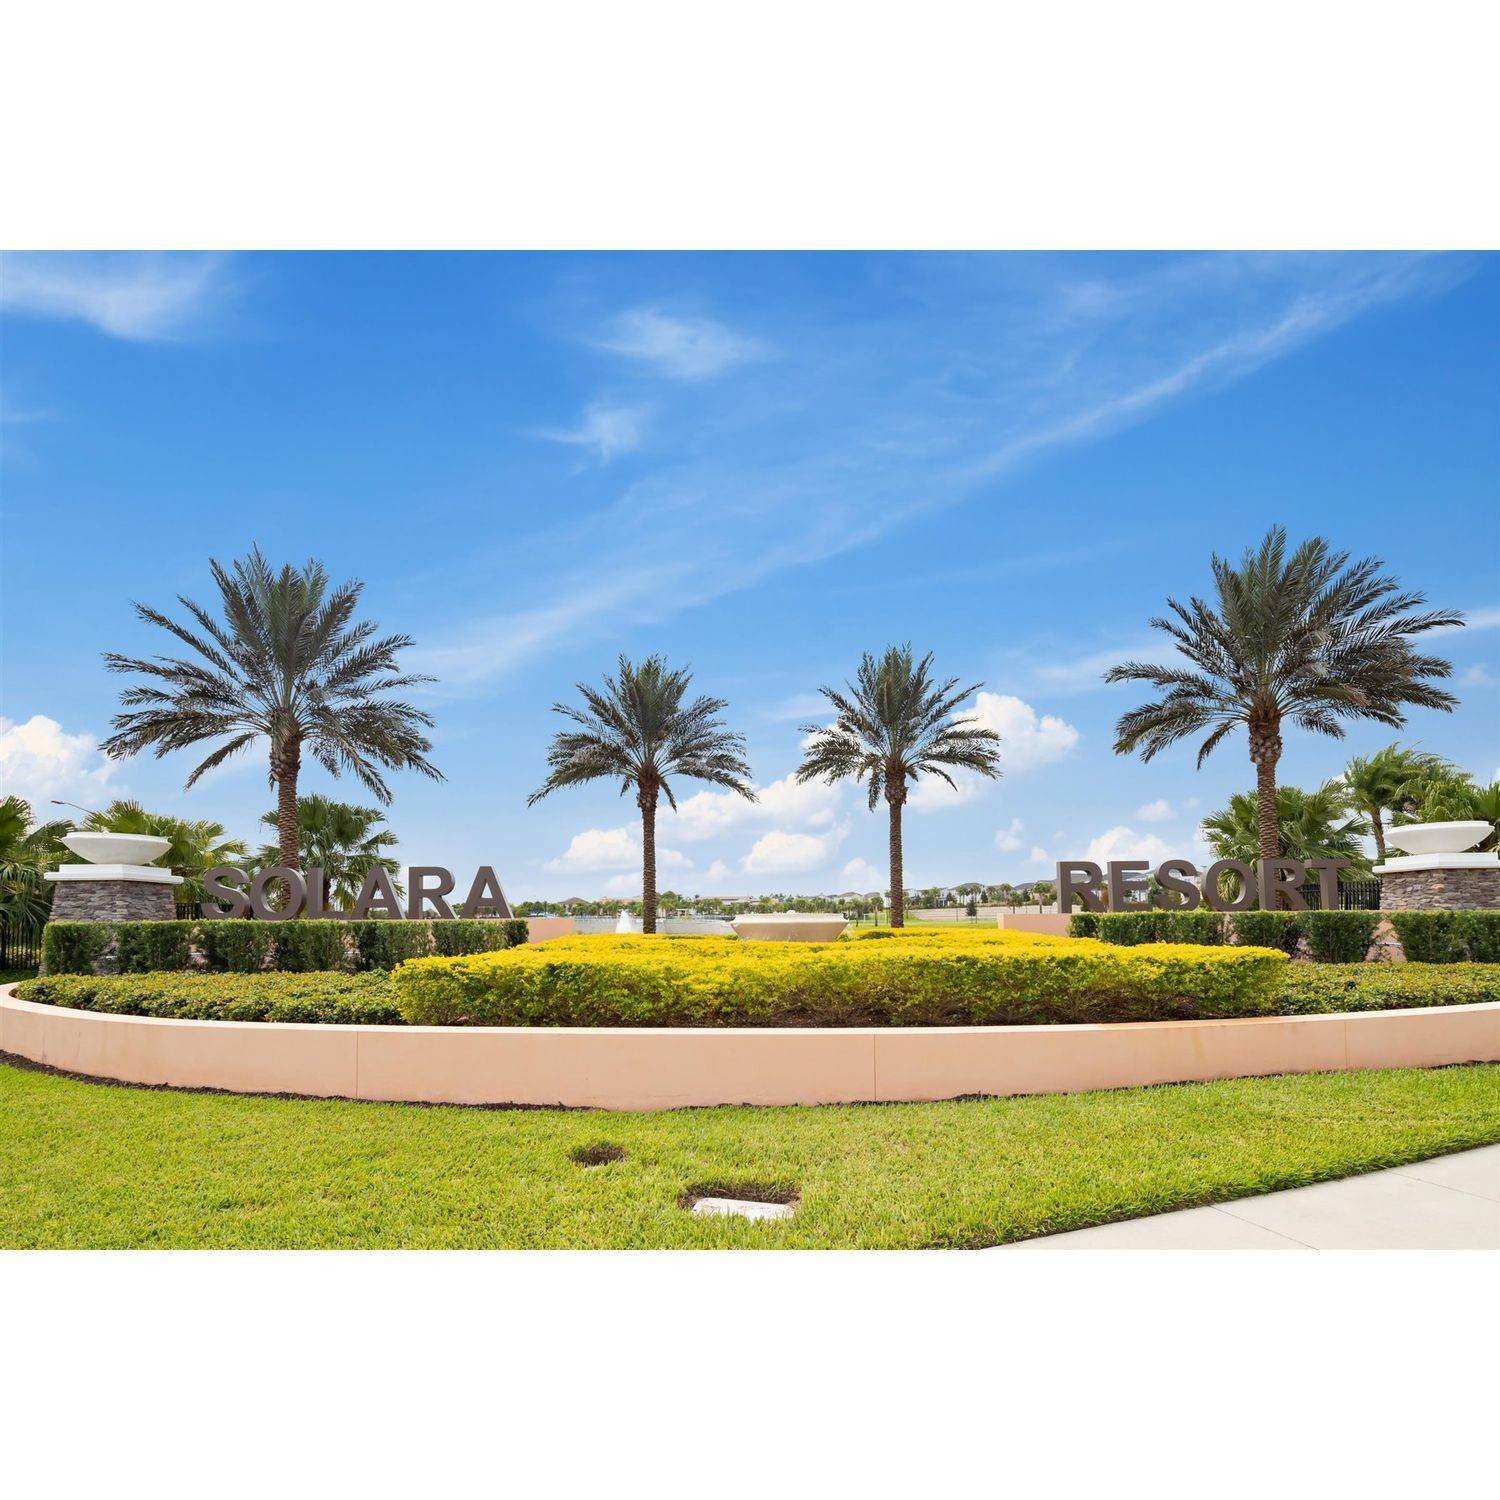 Solara Resort building at 1575 Carey Palm Circle, Kissimmee, FL 34747